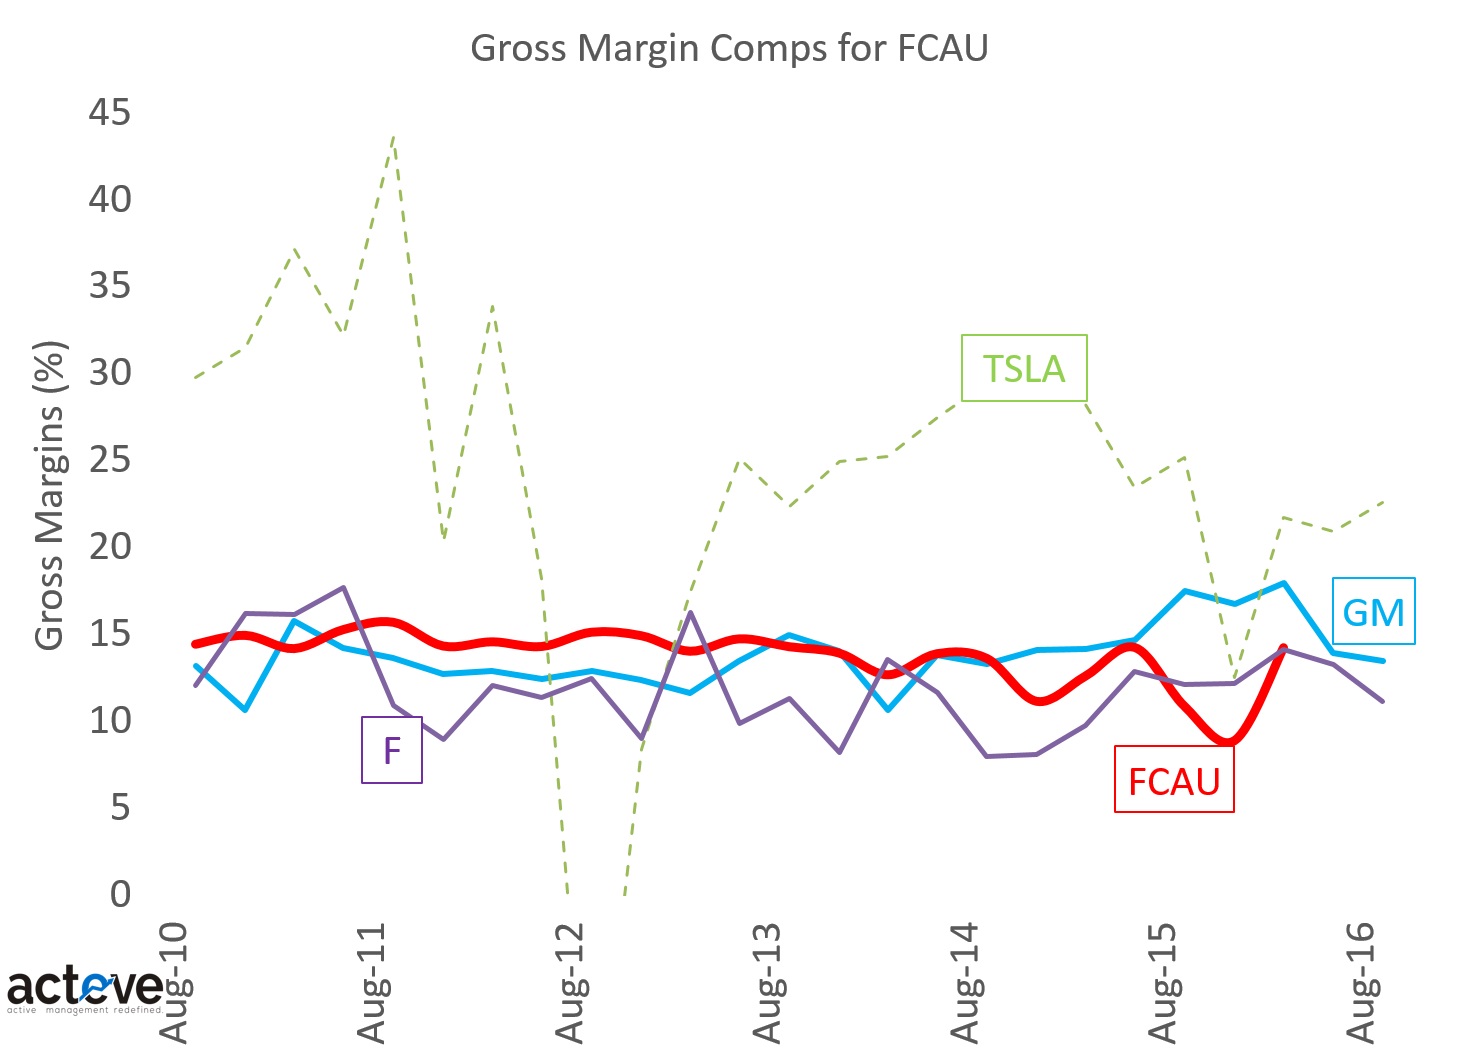 FCAU Gross Margin Comps 120816